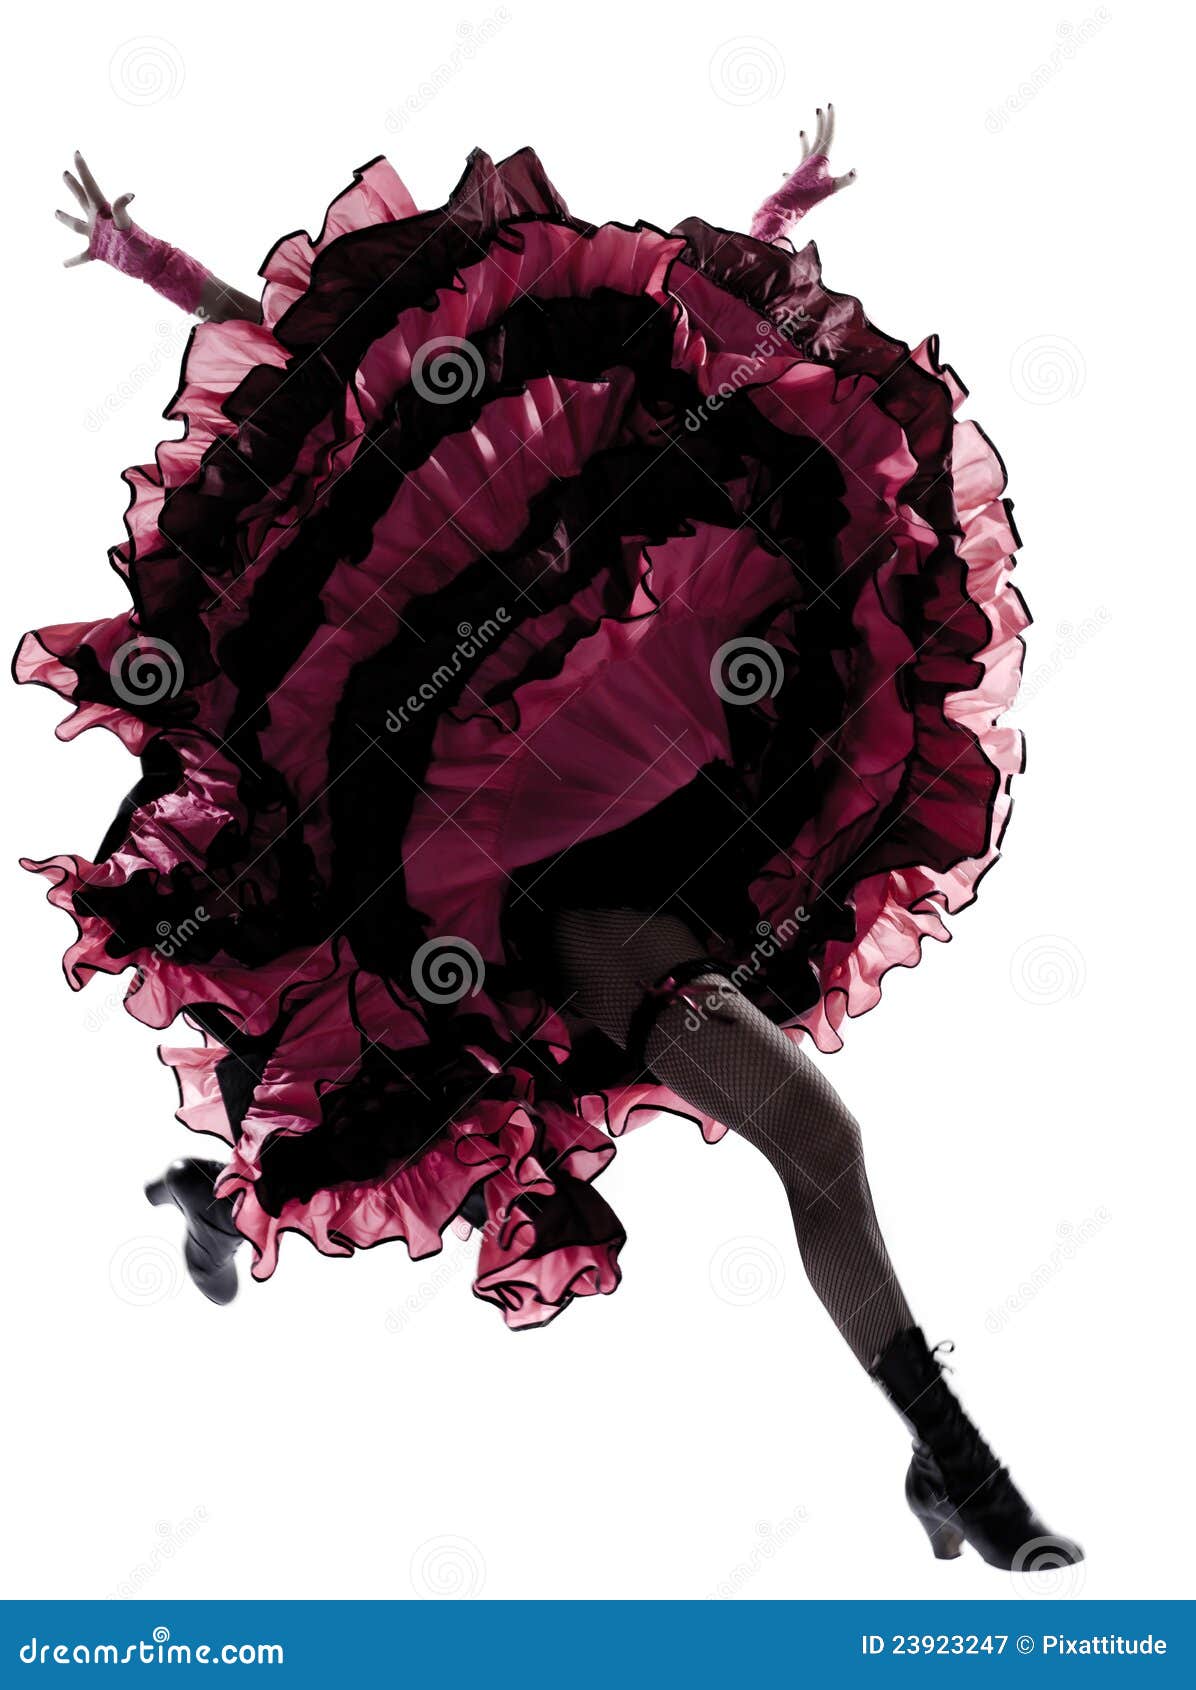 Cancan dancer stock photo. Image of elegance, costume - 54619770